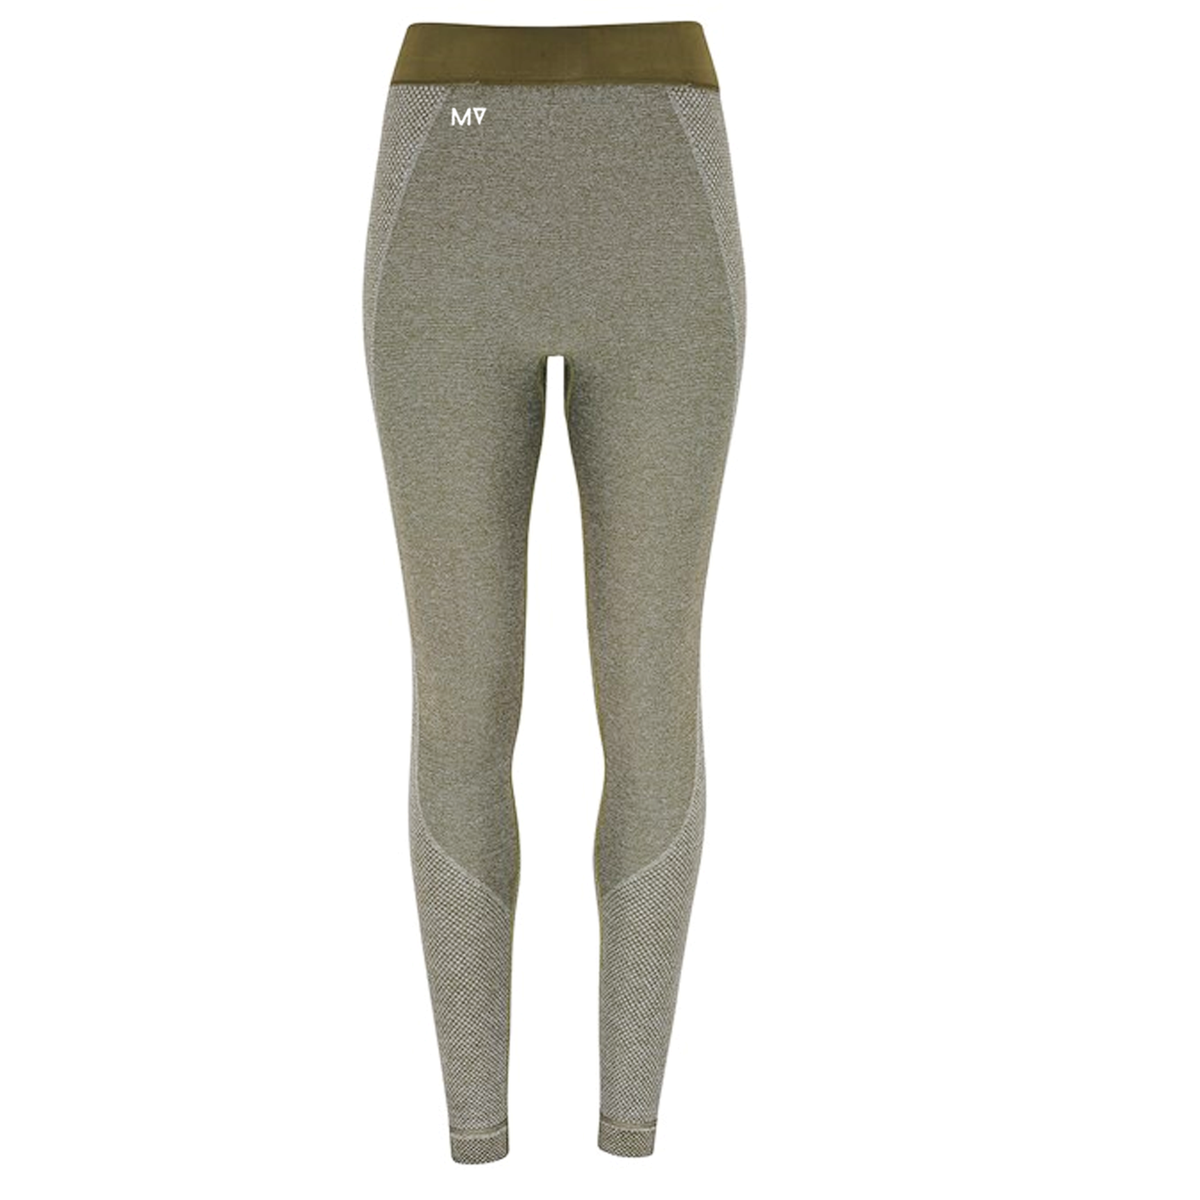 Ladies MV seamless &#39;3D fit&#39; multi-sport sculpt leggings - Olive